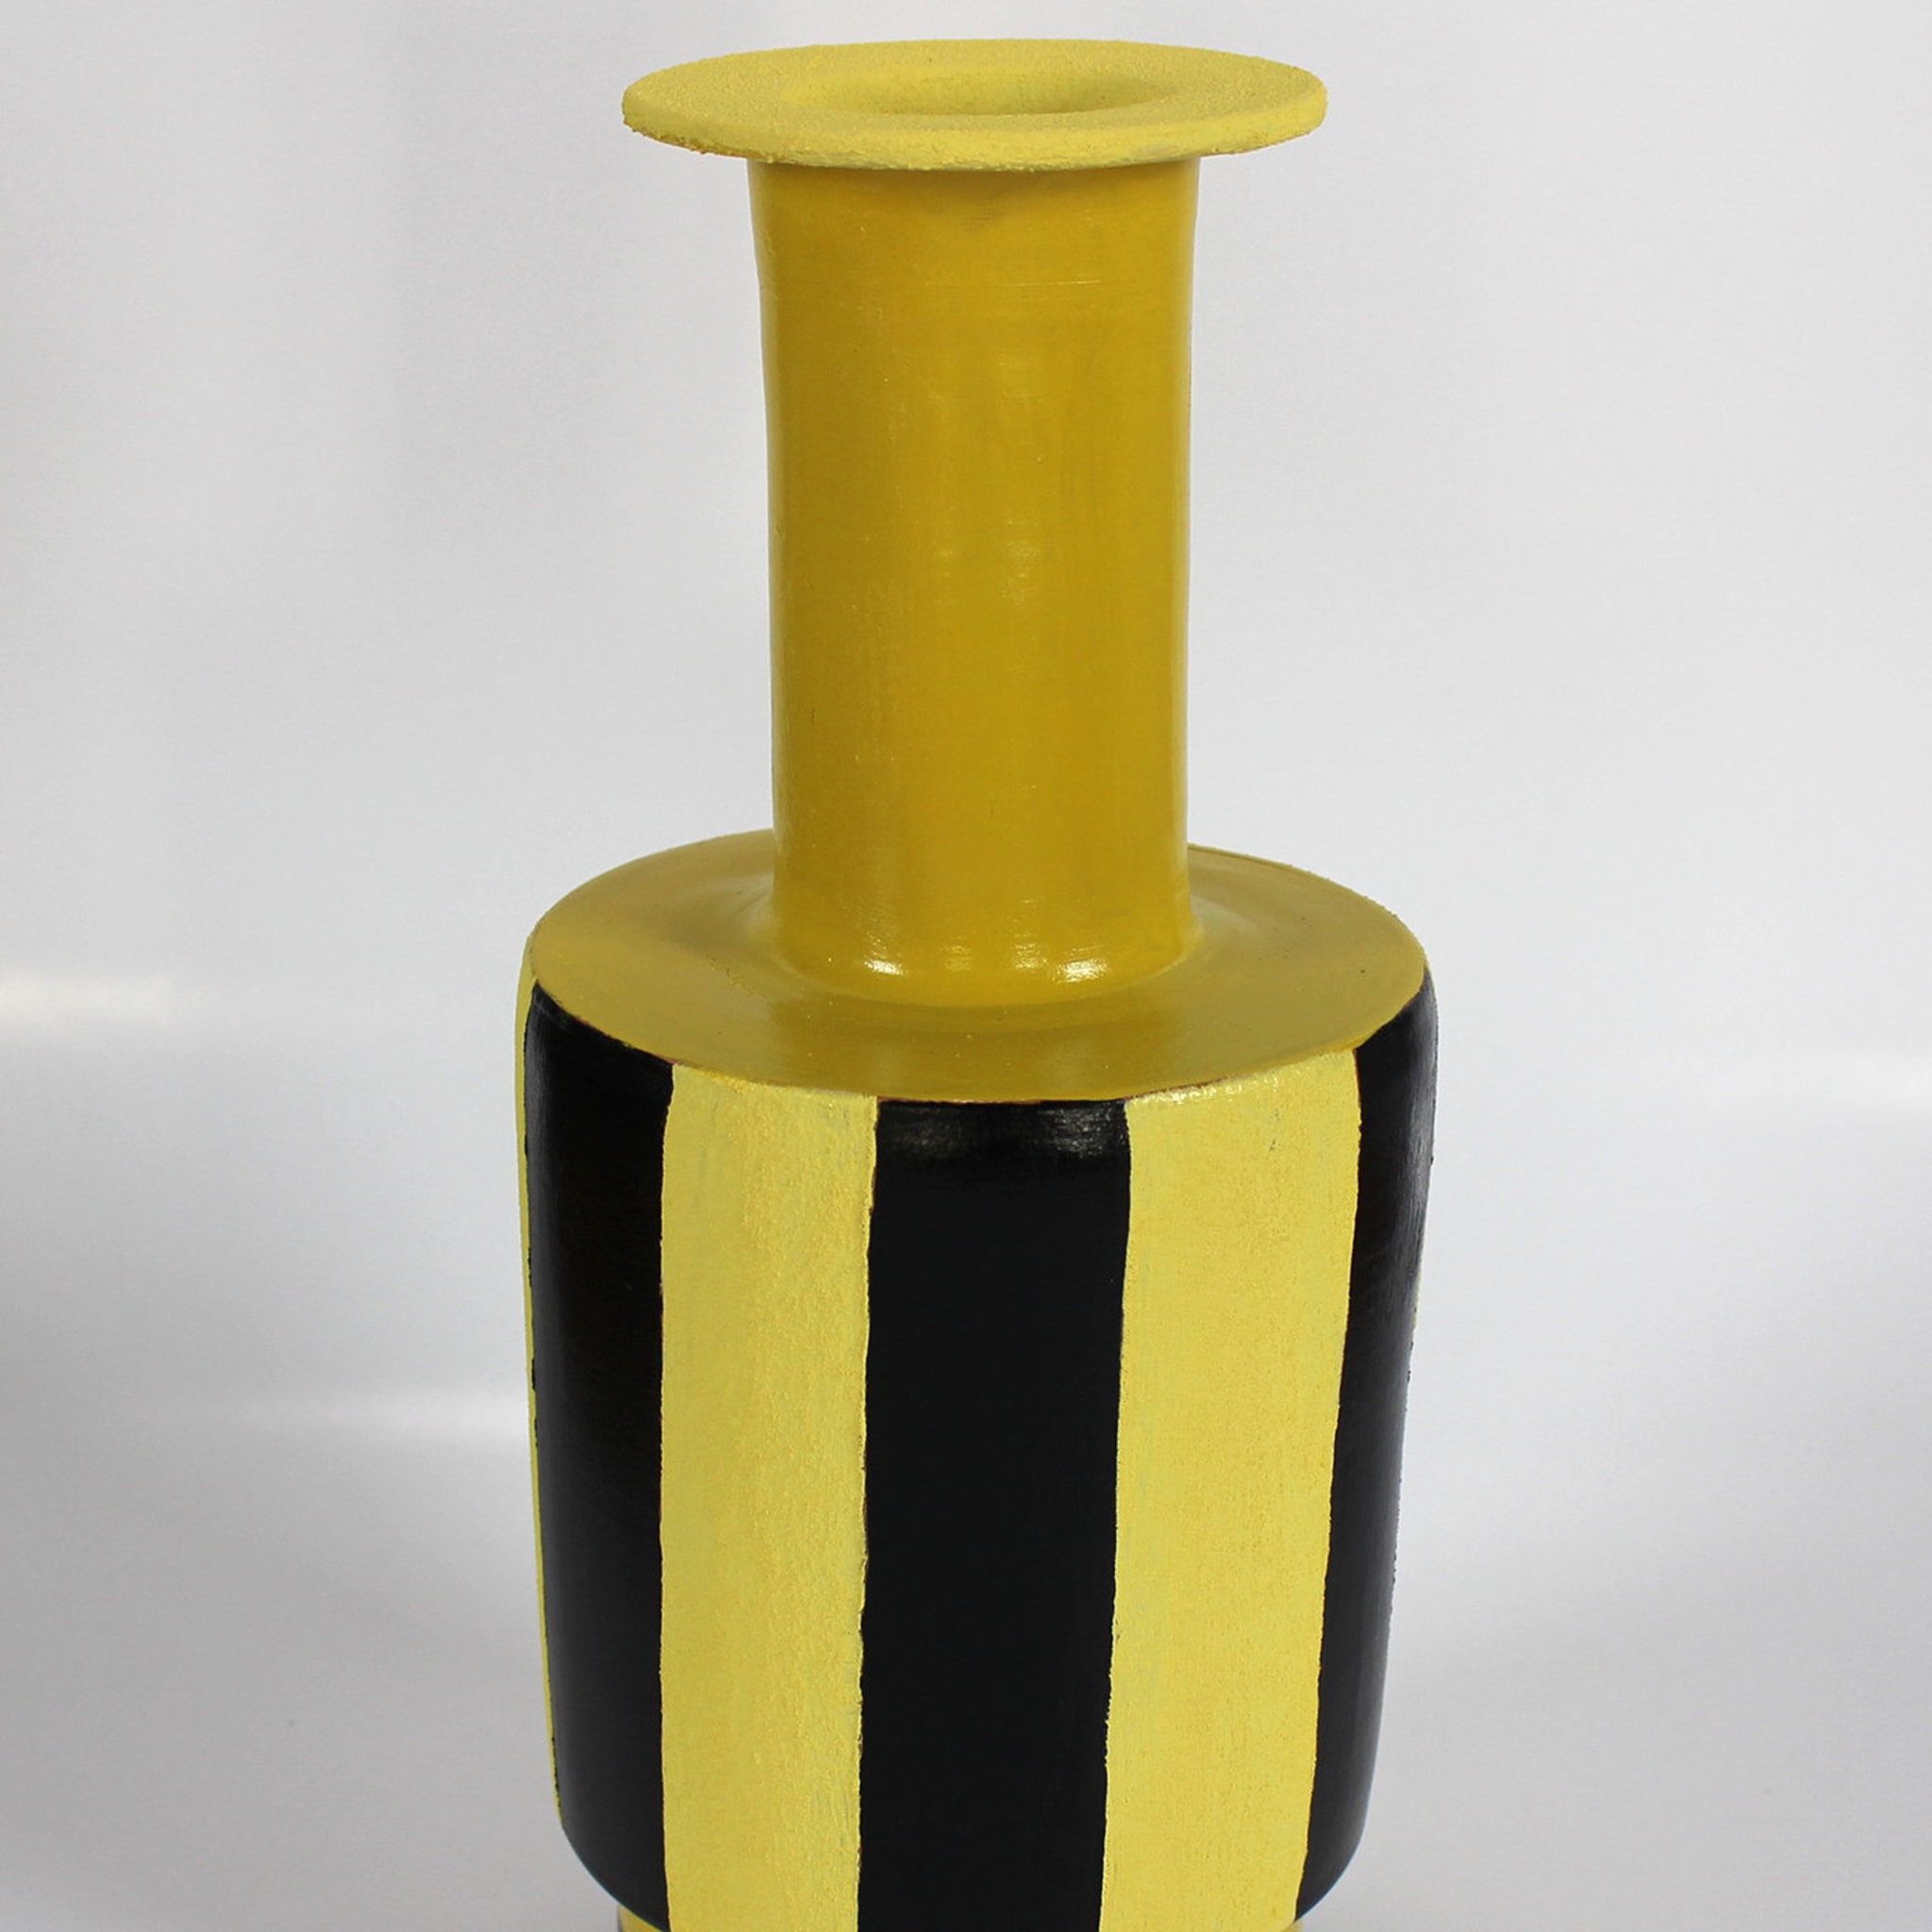 Terracotta Vase 10 by Mascia Meccani - Alternative view 1